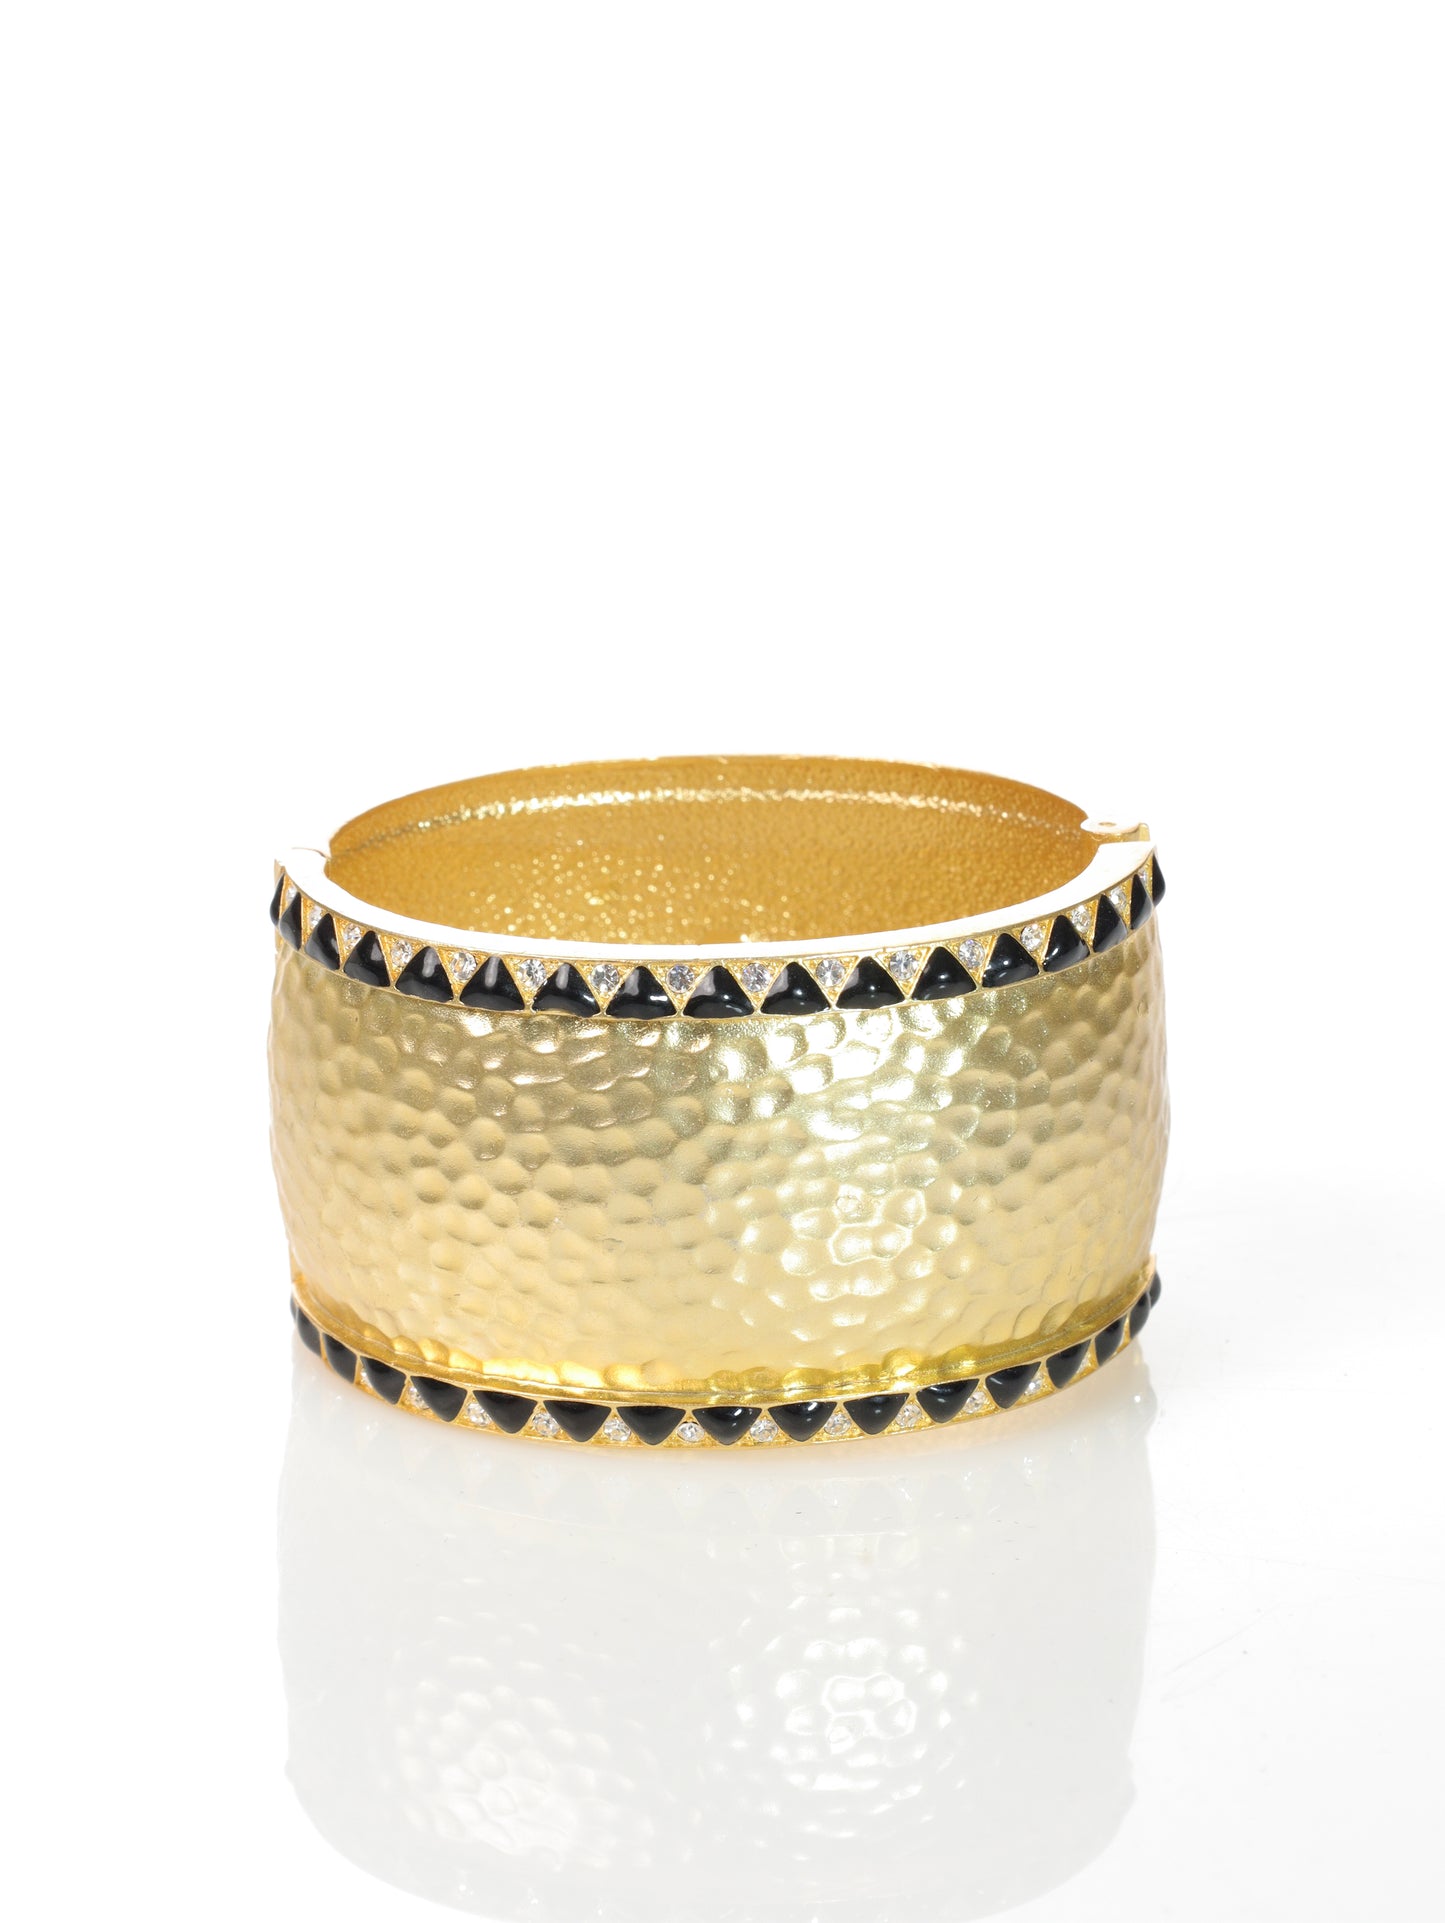 CHANEL Bracelet Cuff Bangle Gold Black Rhinestone Large CC